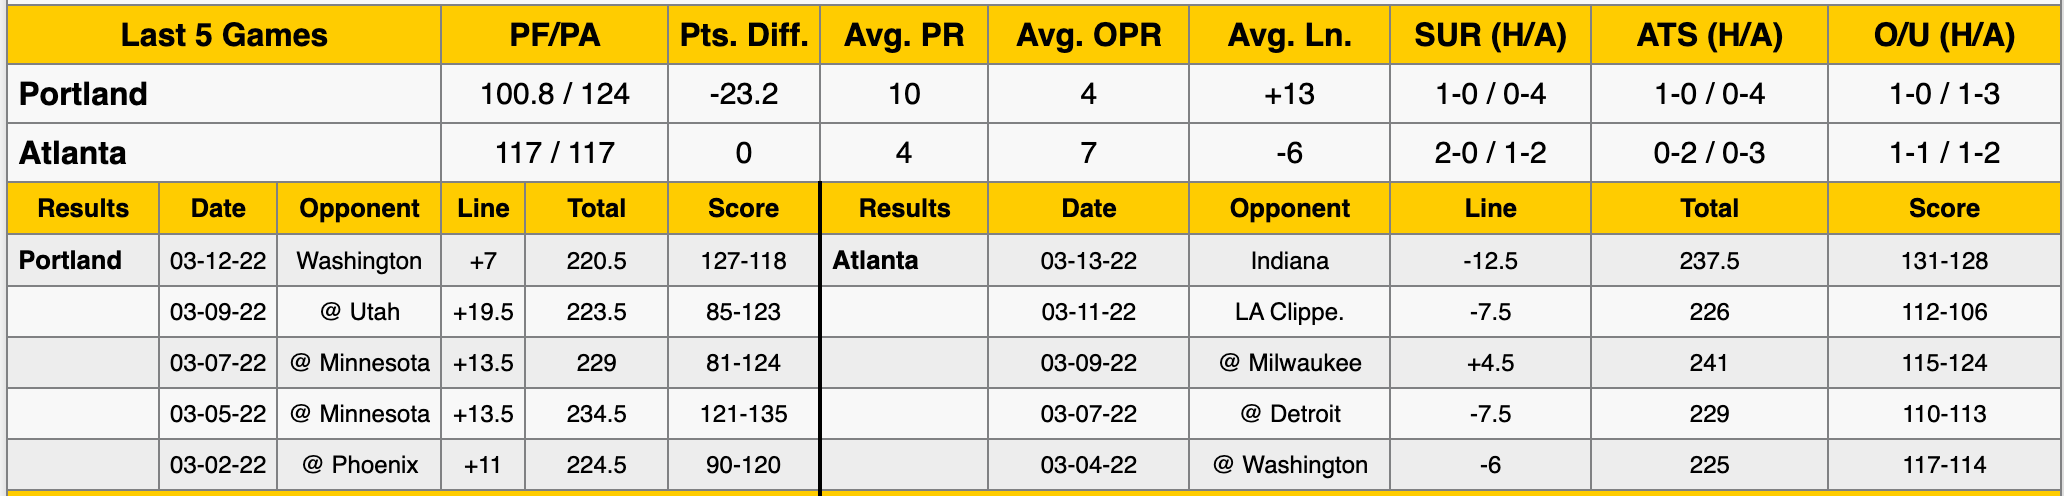 Atlanta Hawks vs Portland Trailblazers Data